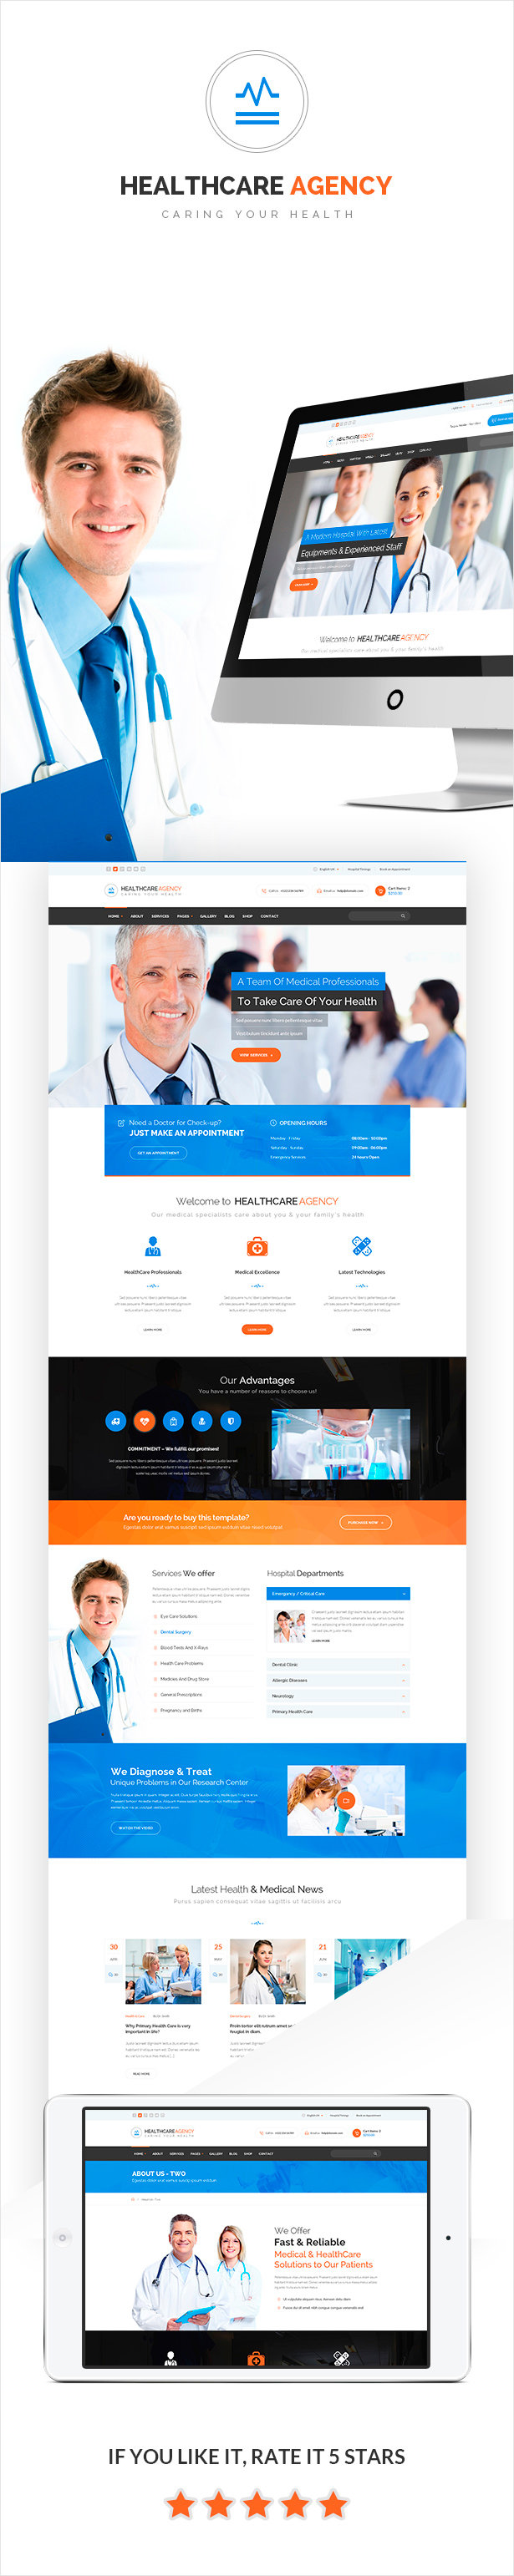 Healthcare Agency - Medical HTML - 2